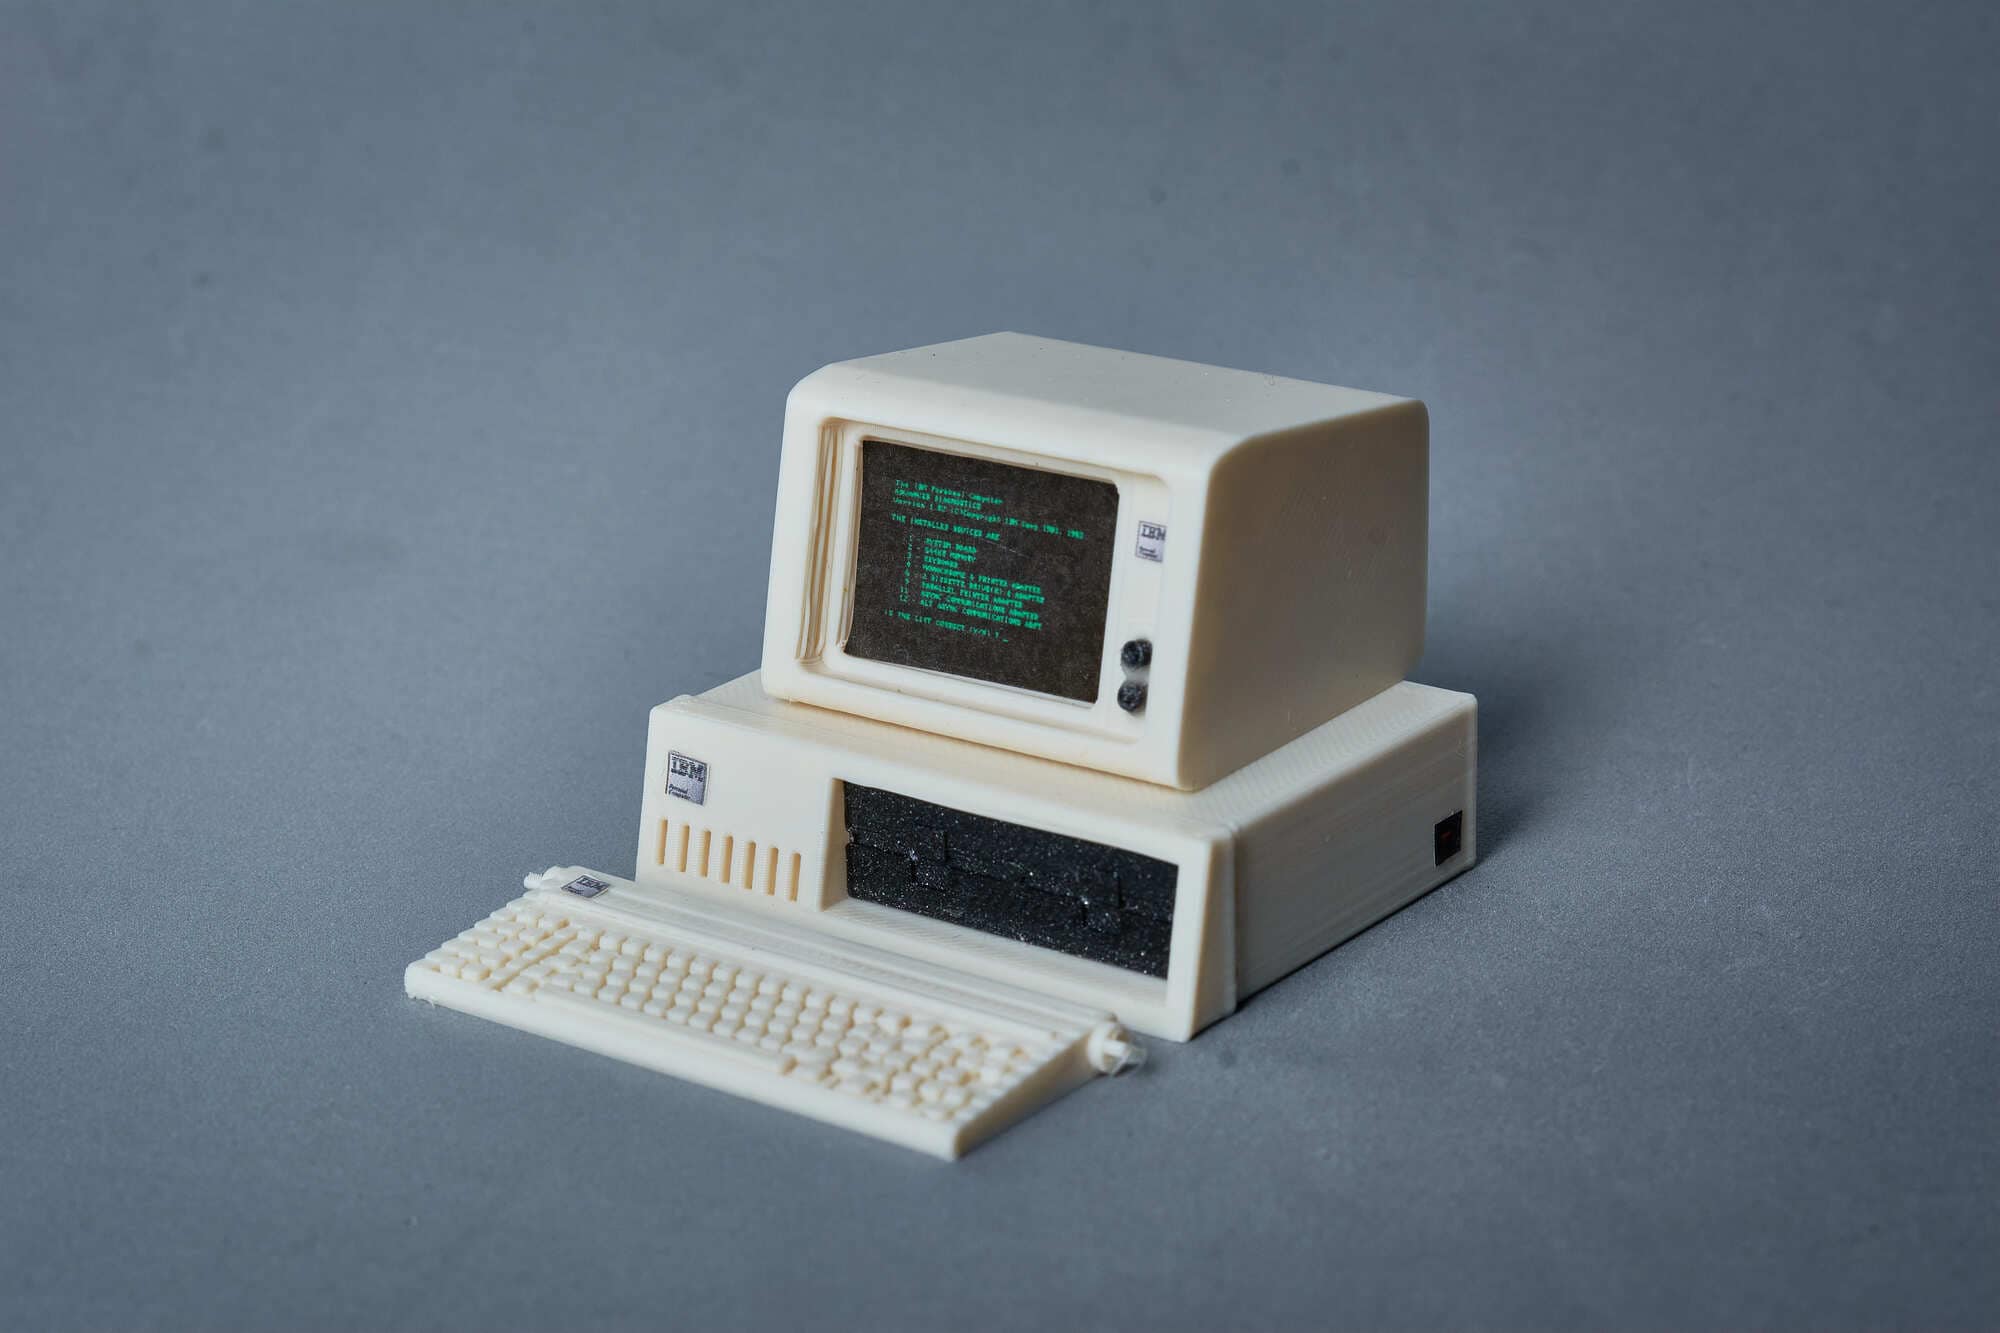 IBM Personal Computer Miniature - Etsy